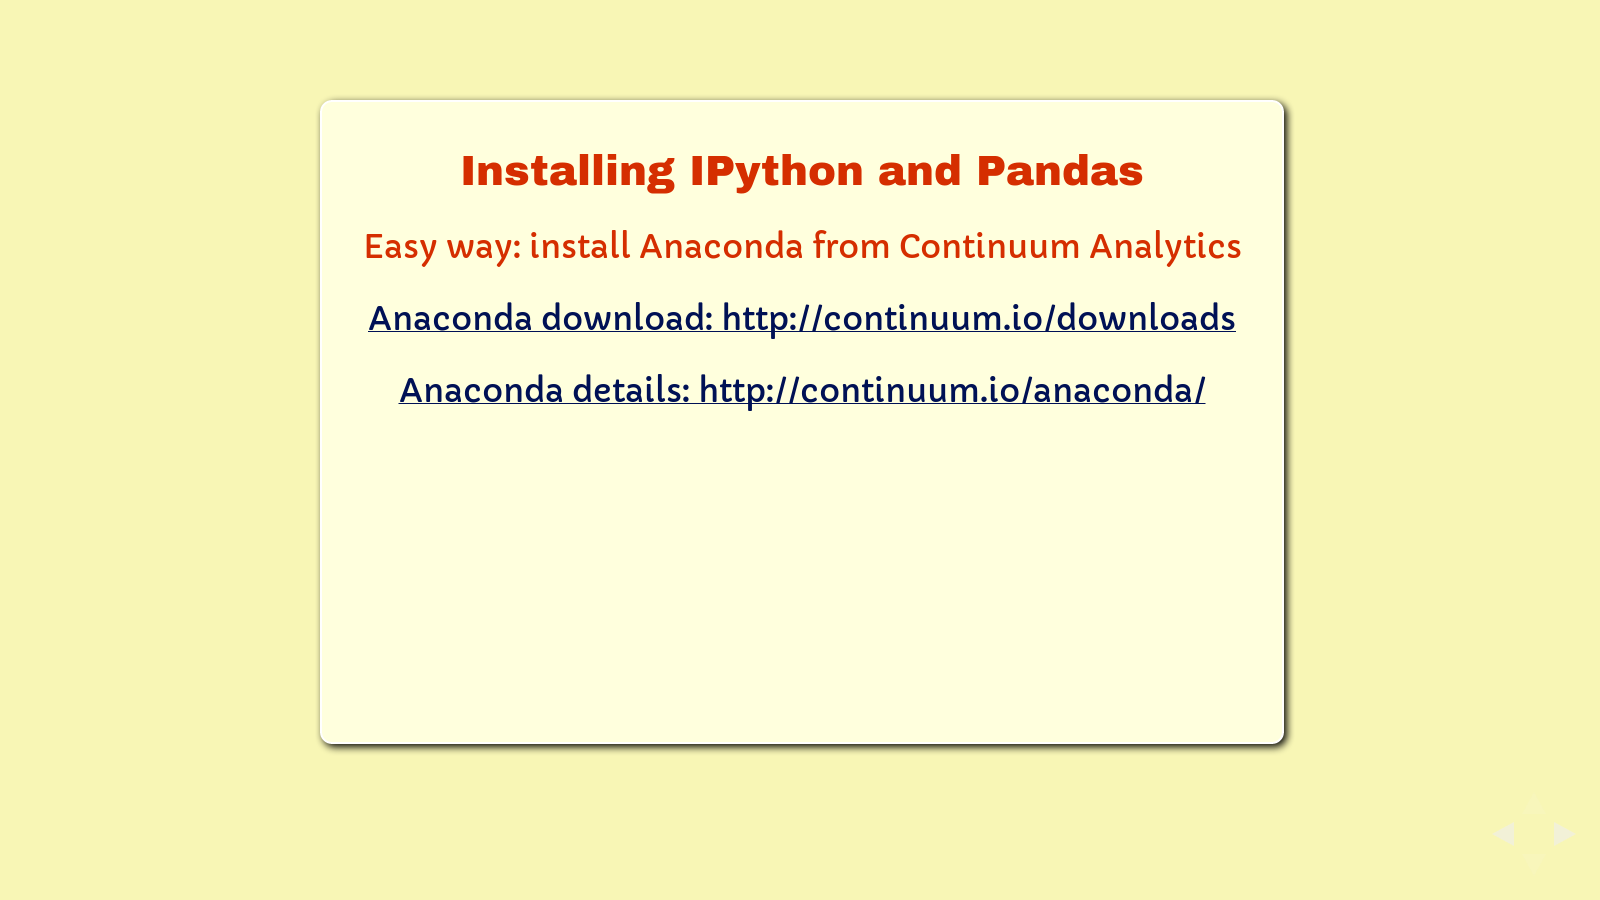 Slide: Installing IPython and Pandas